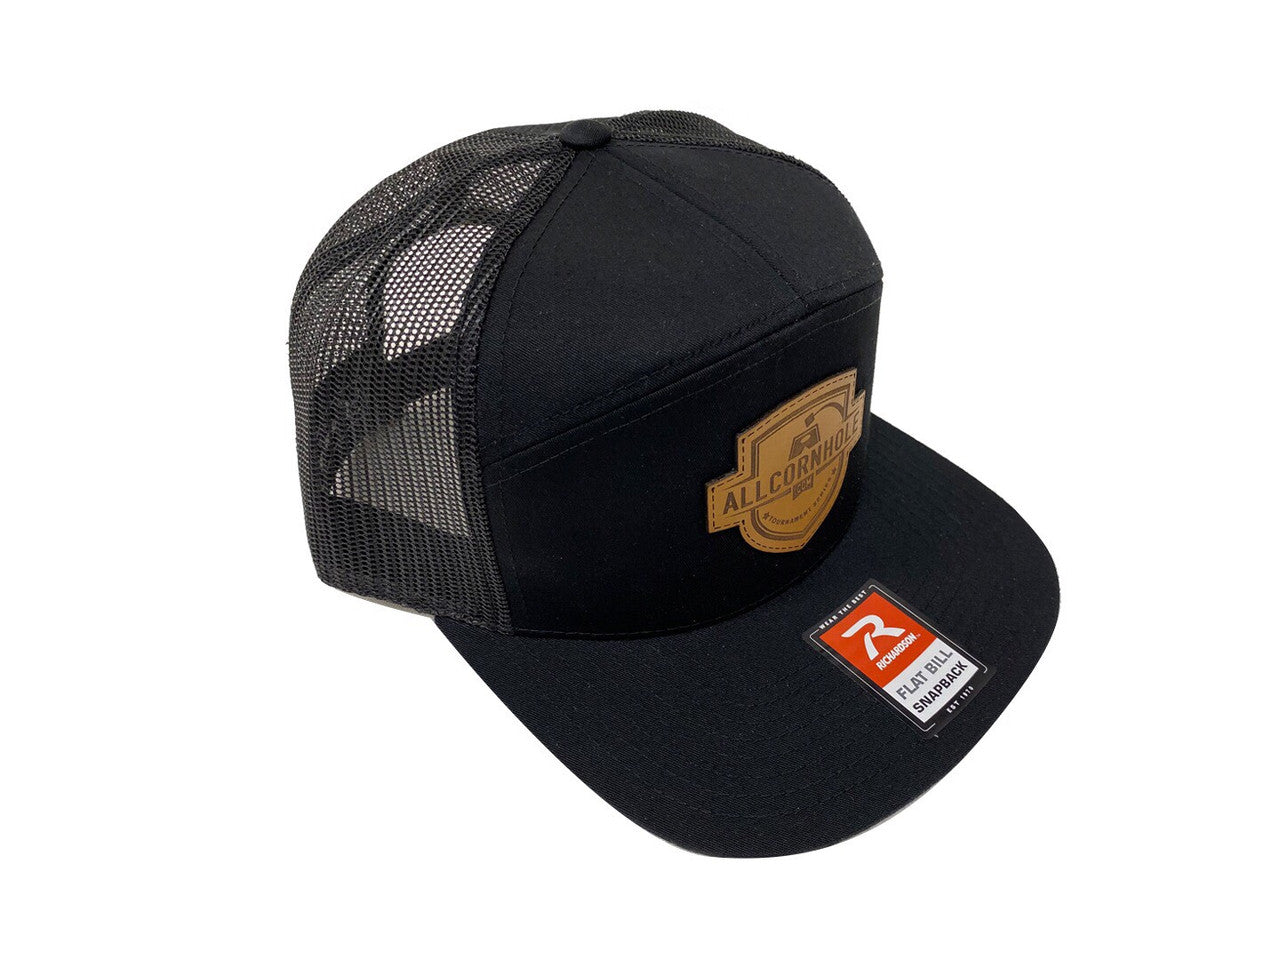 AllCornhole Flat Bill Black Snapback Hat with shield - Free Shipping